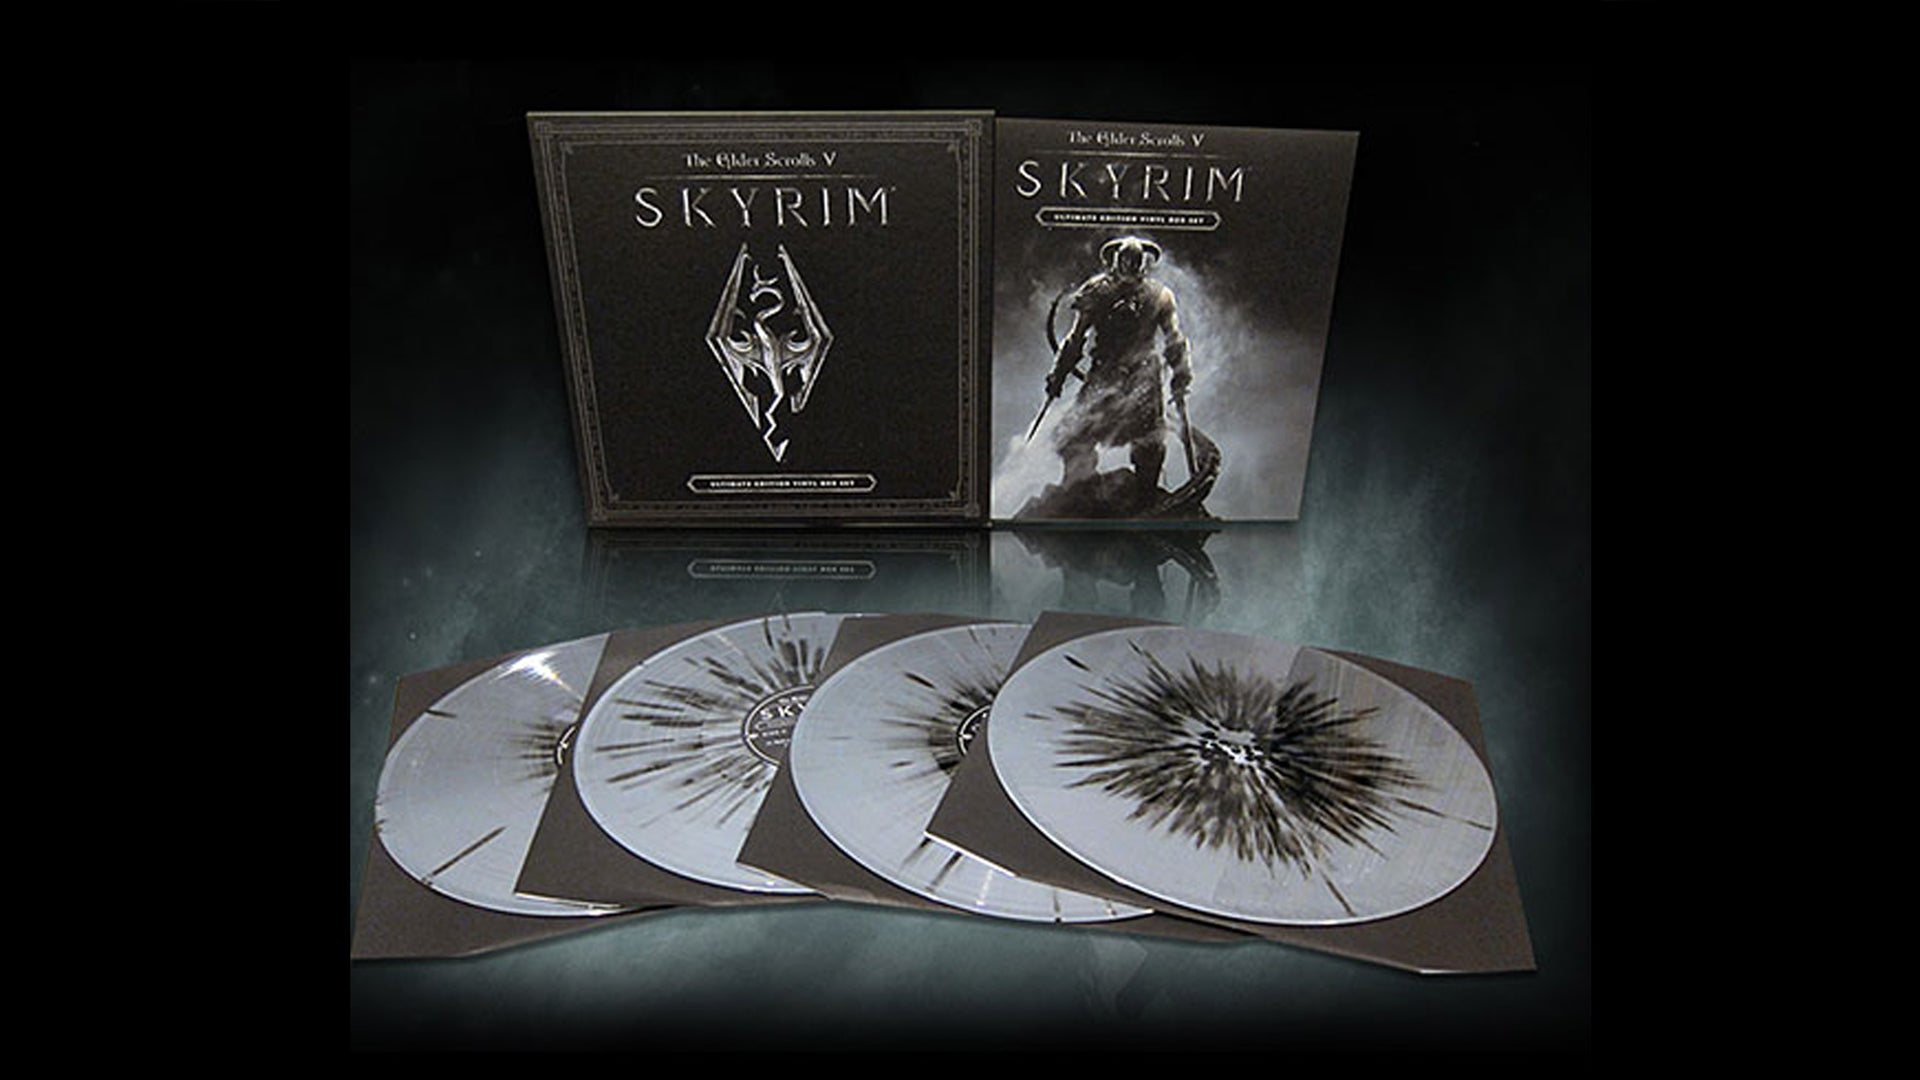 Image for The Elder Scrolls V: Skyrim Soundtrack Is Now Available on Vinyl